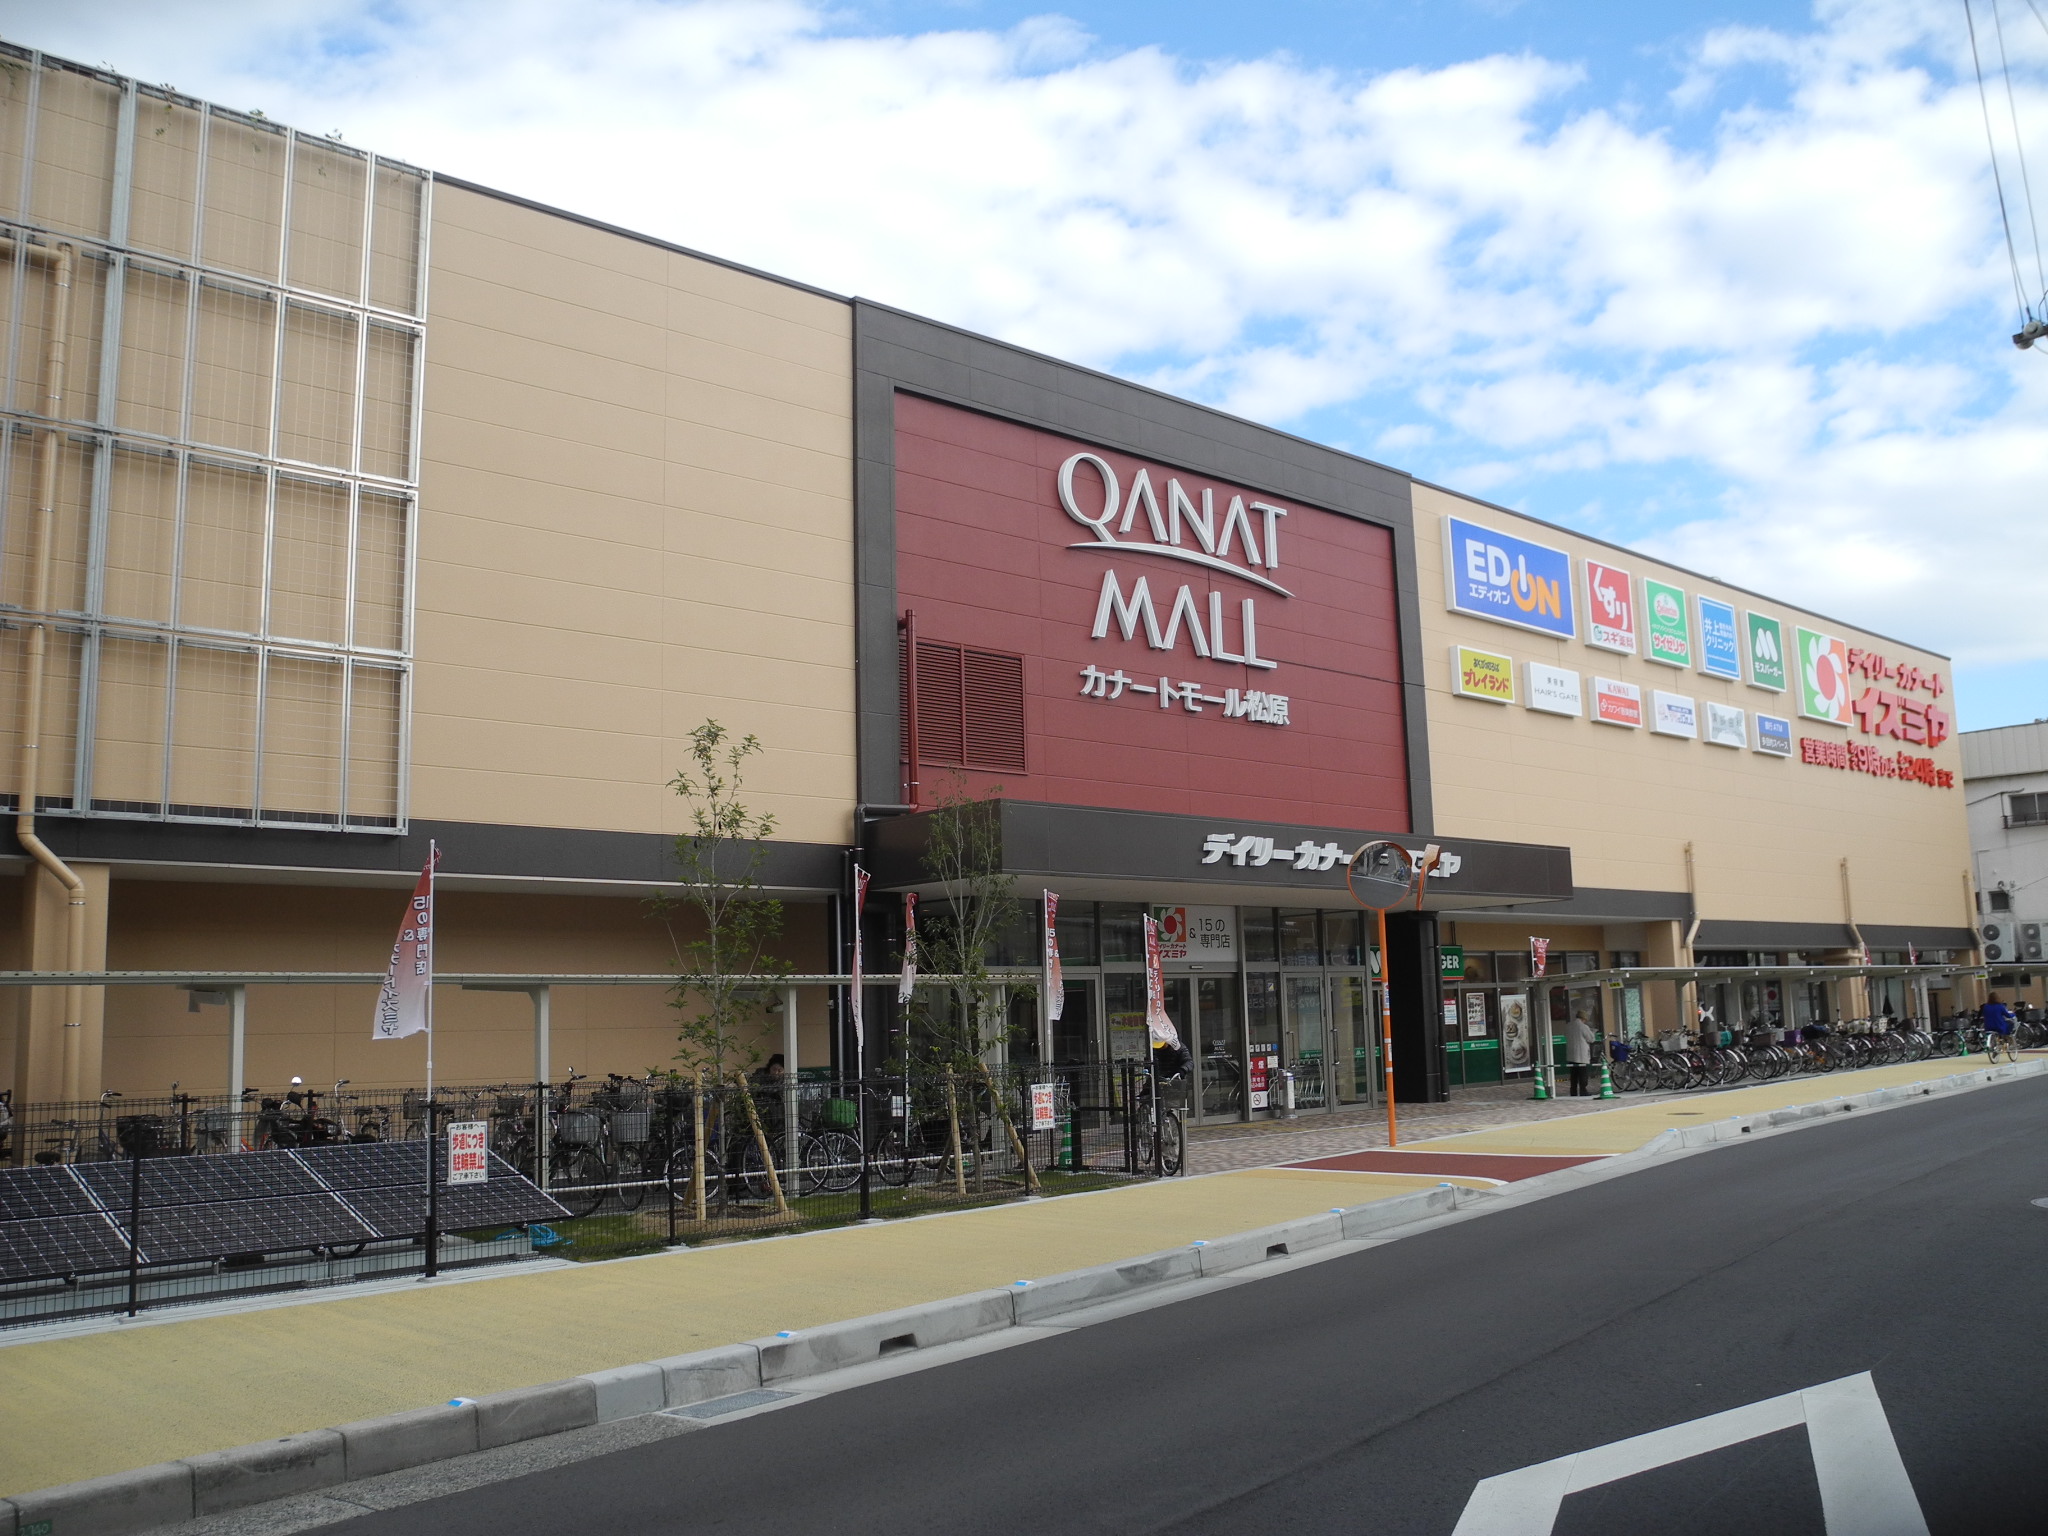 Shopping centre. 178m until qanat Mall Matsubara (shopping center)